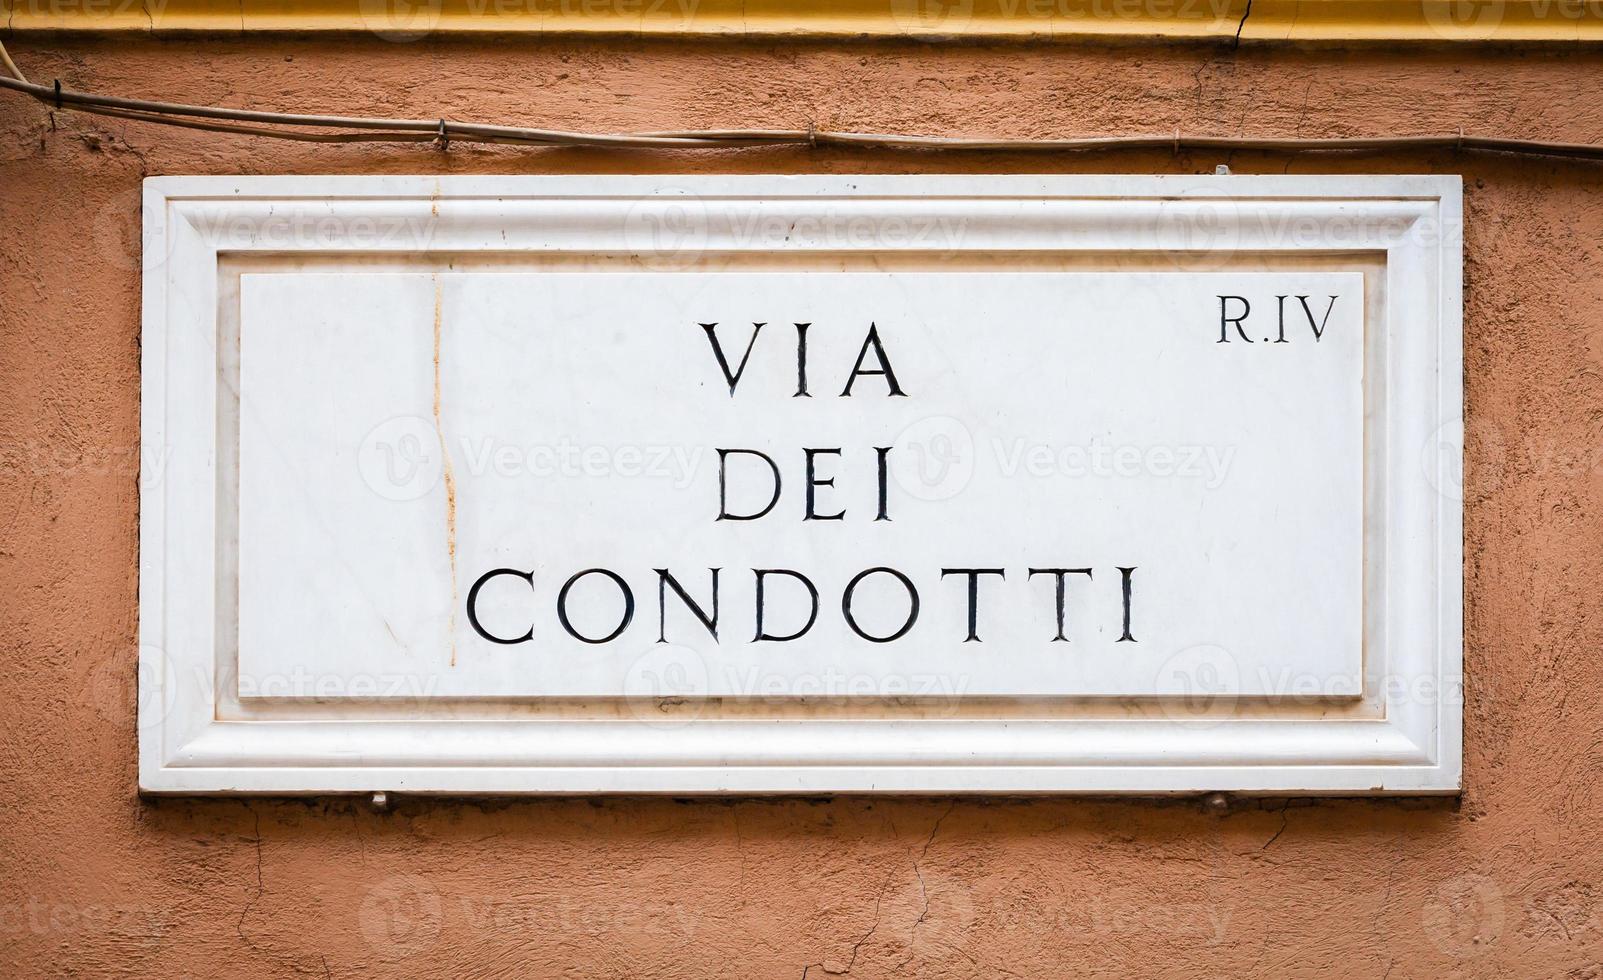 Roma, Italia. placa de calle de la famosa calle condotti - via dei condotti - centro de las compras de lujo romanas. foto